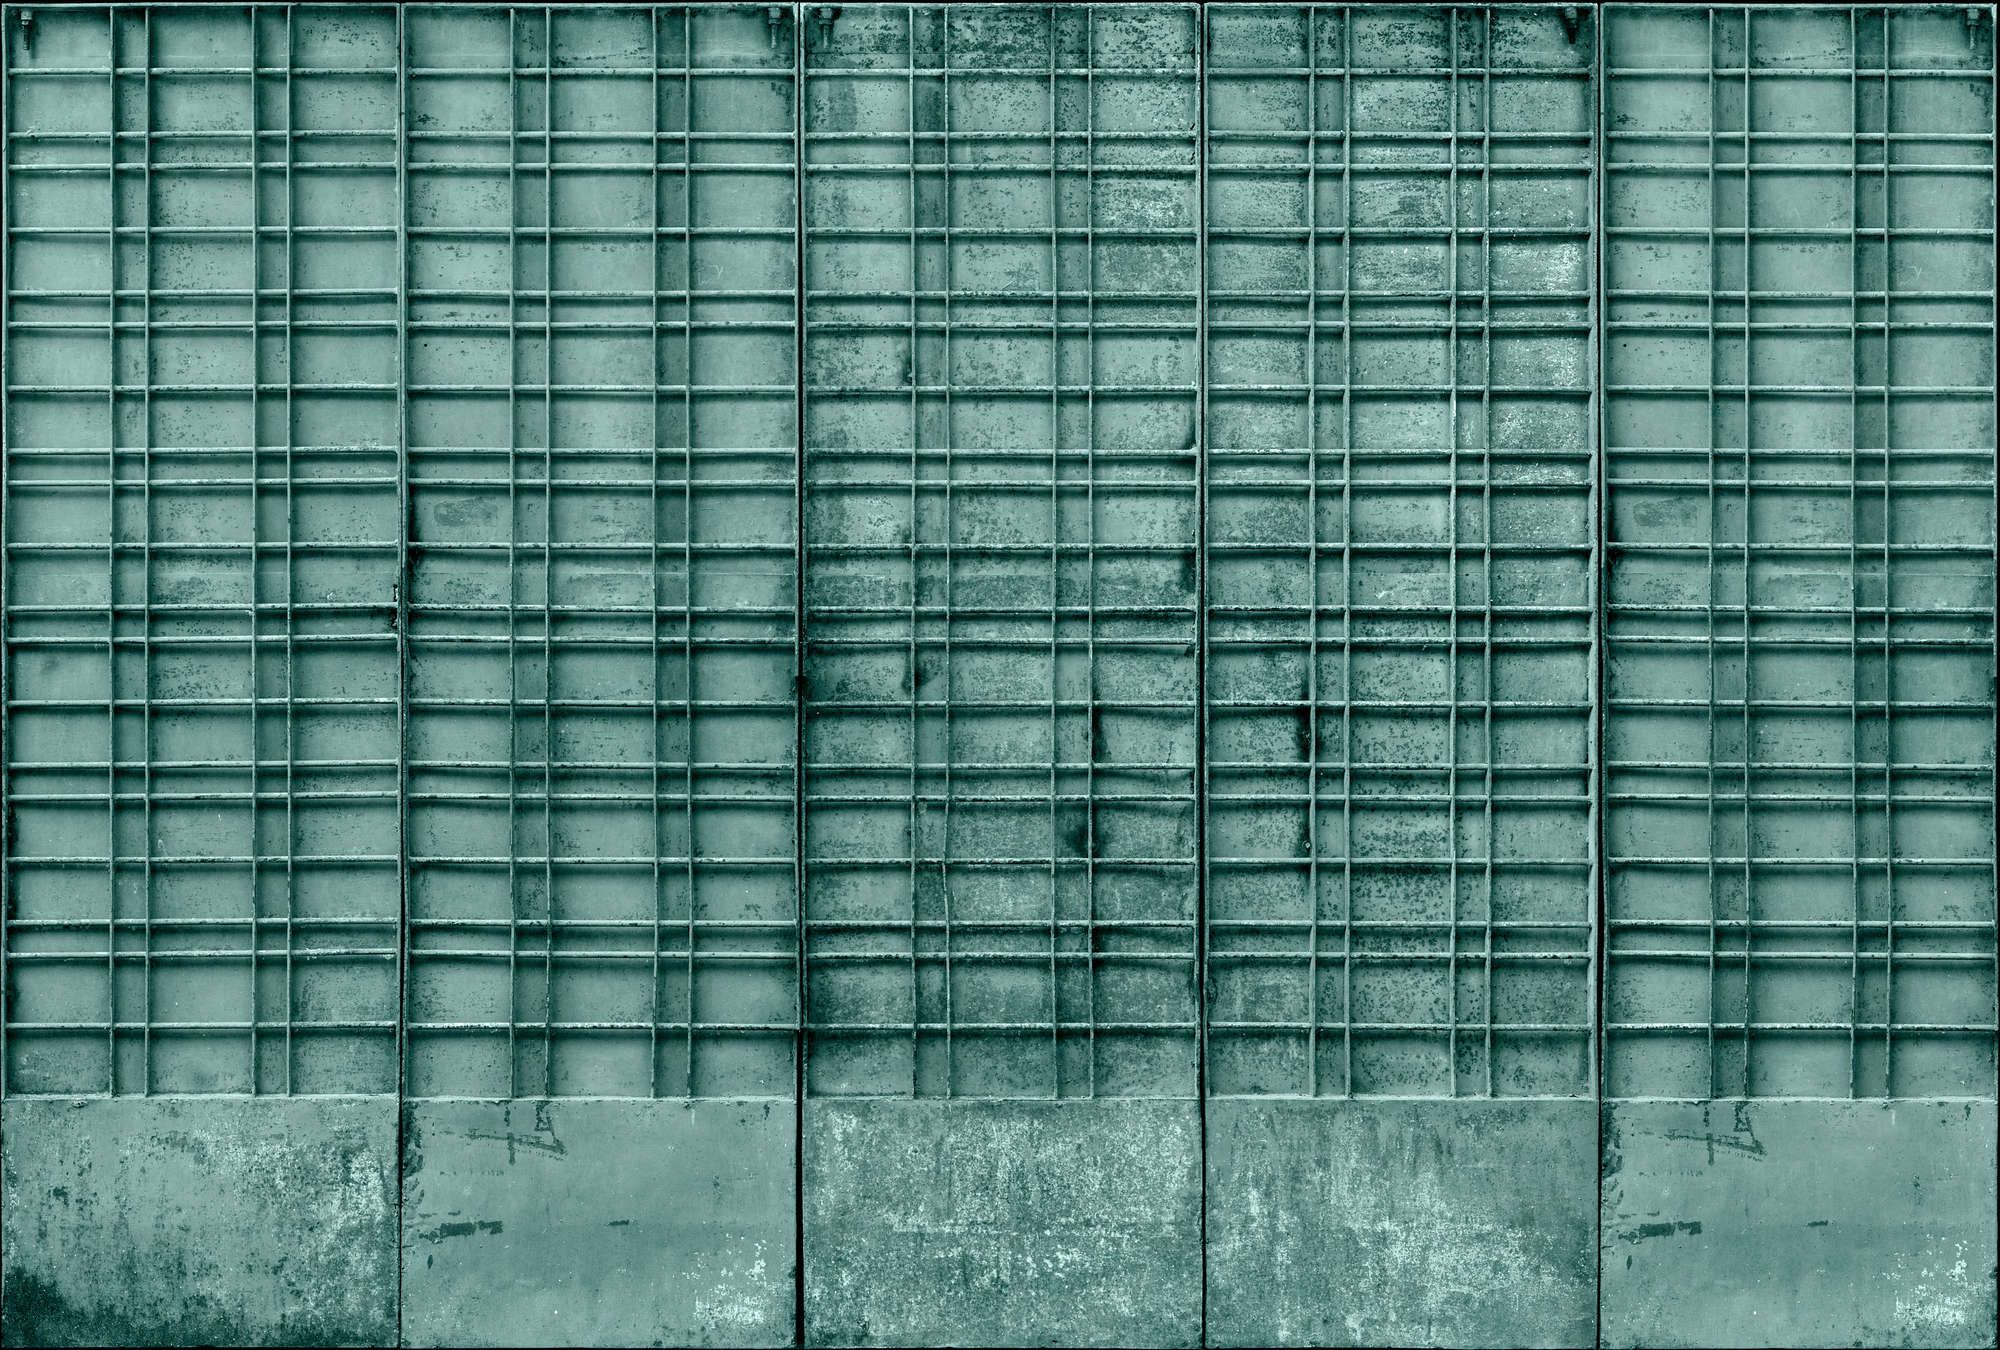             Fotomural »bangalore« - Primer plano de una puerta de metal color petróleo con decoraciones rectangulares - Tela no tejida de textura ligera
        